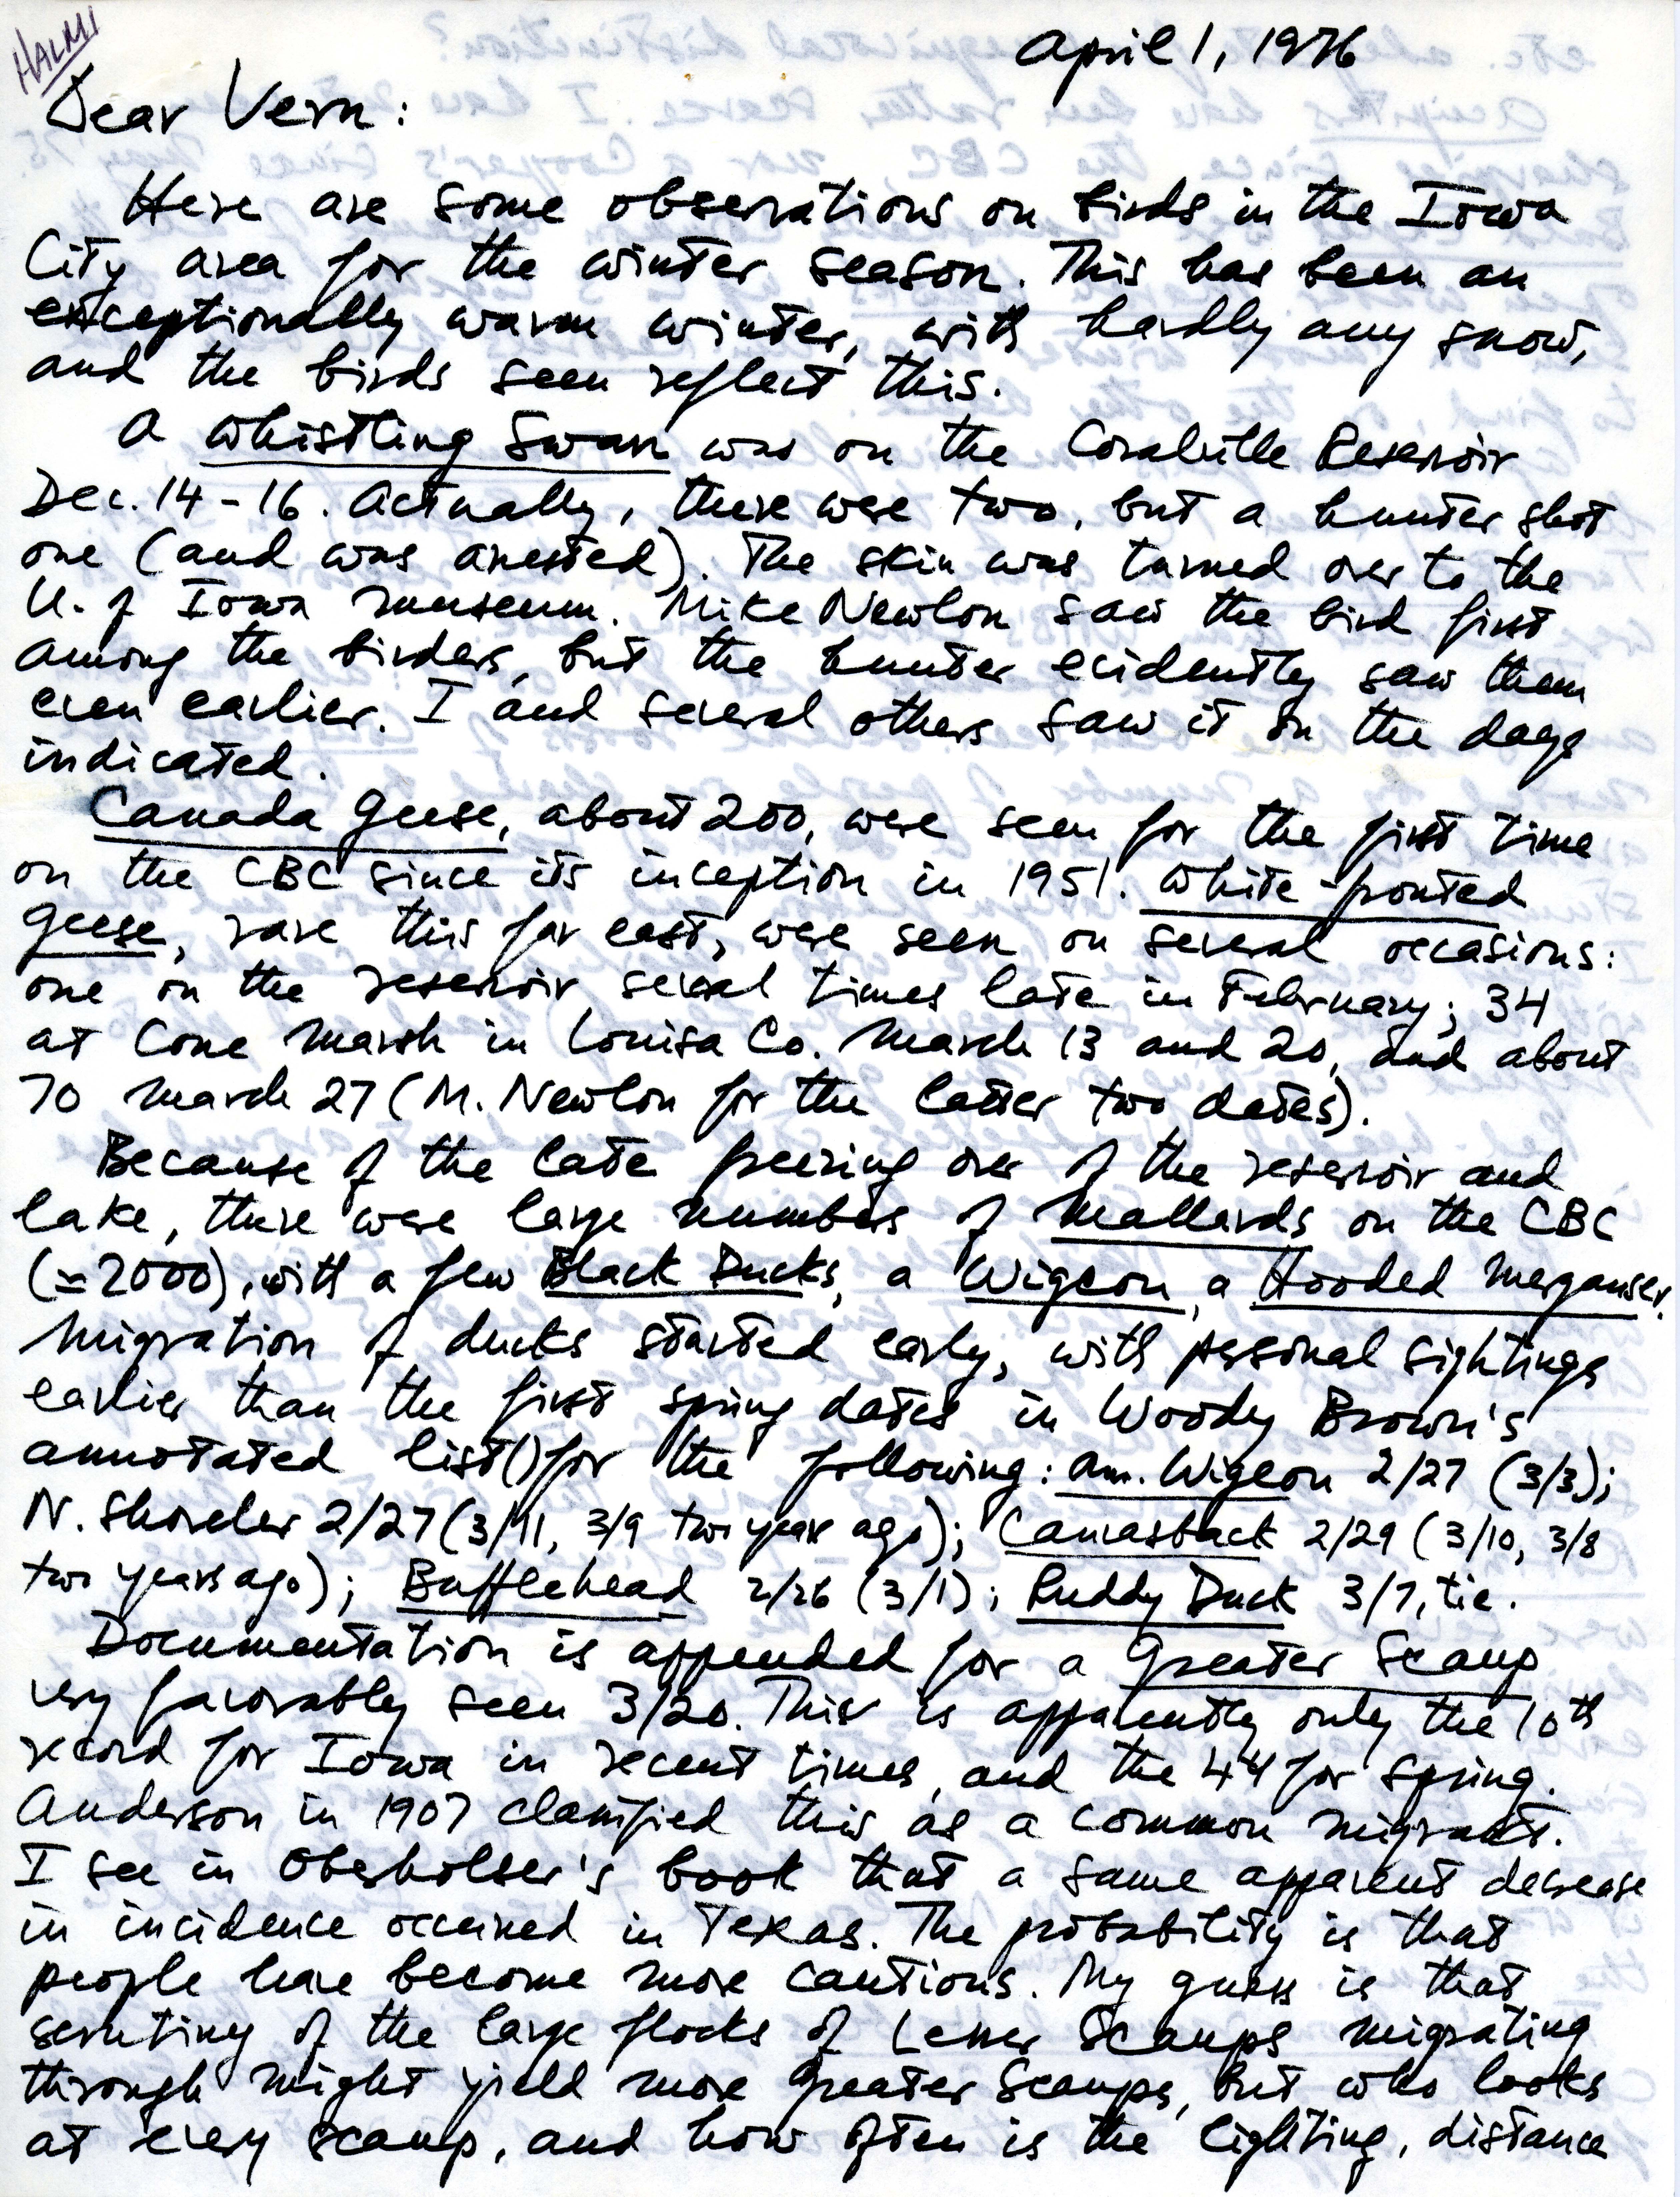 Nicholas S. Halmi letter to Vernon M. Kleen regarding birds observed near Iowa City, April 1, 1976